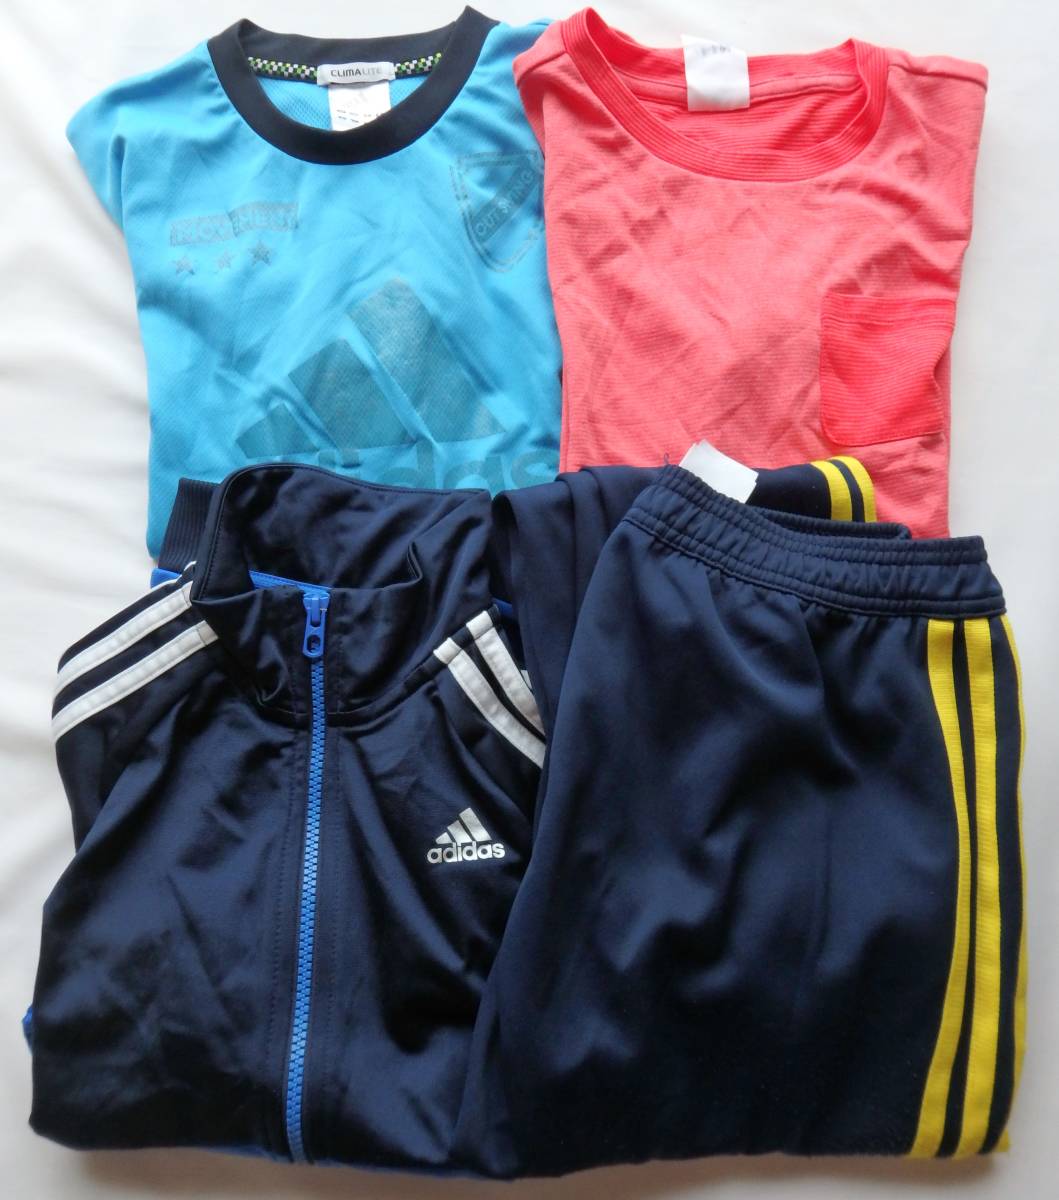  ребенок Junior Kids спорт одежда 4 пункт суммировать * размер 150*ADIDAS Adidas * футболка 2 листов, джерси жакет, джерси брюки 